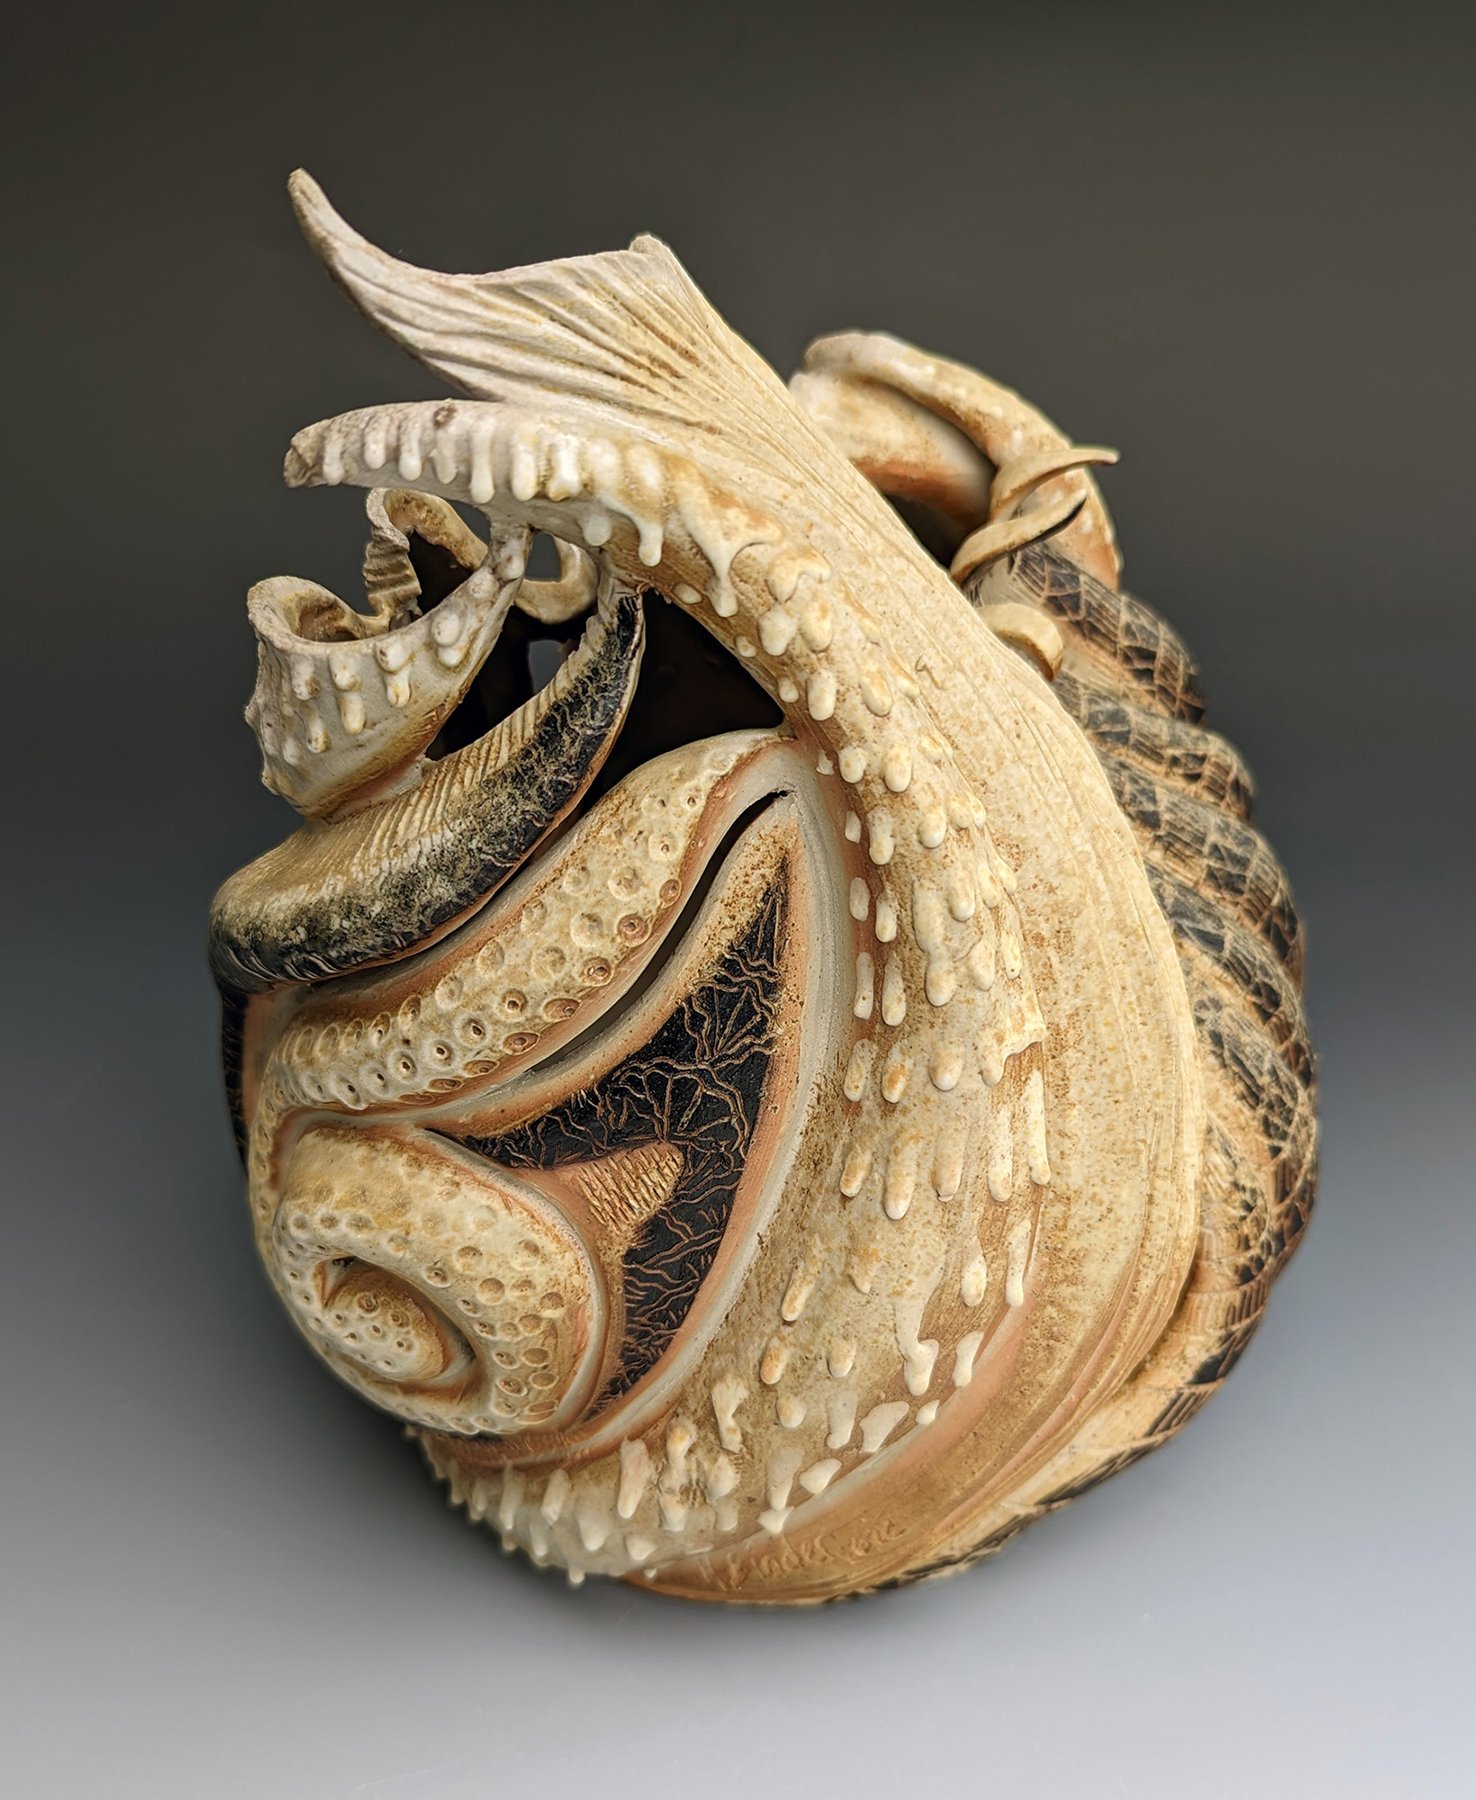    Deep Dive,   wood-fired ceramics, 9.5 x 8 x 7 inches 